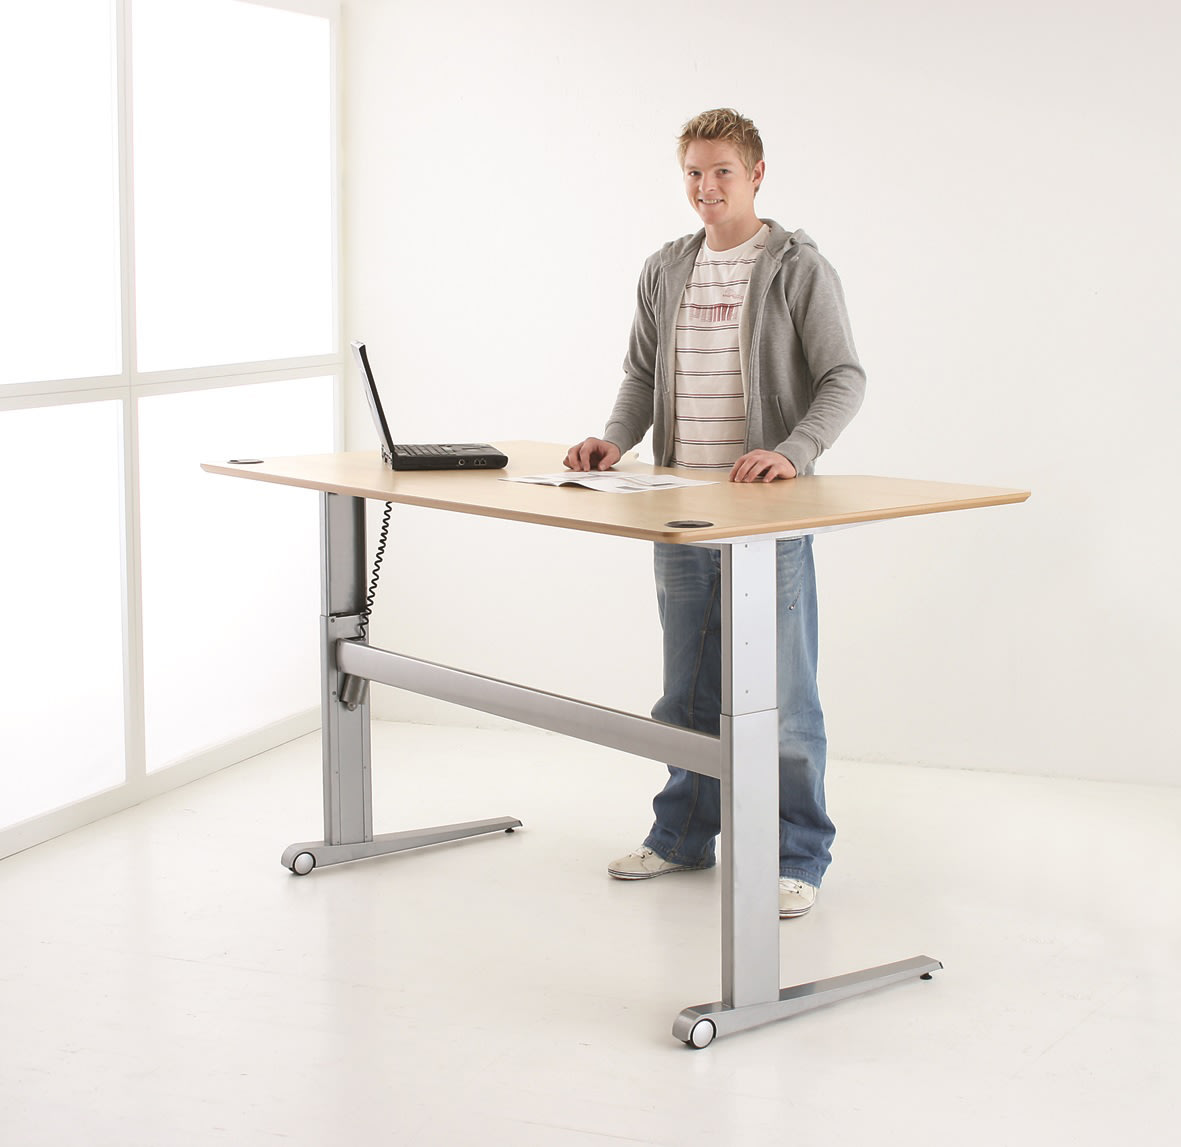 Stand height. Стол Desk Stand up 12. Стол офисный регулируемый. Стол с изменяемой высотой. Офисный стол стоячий.